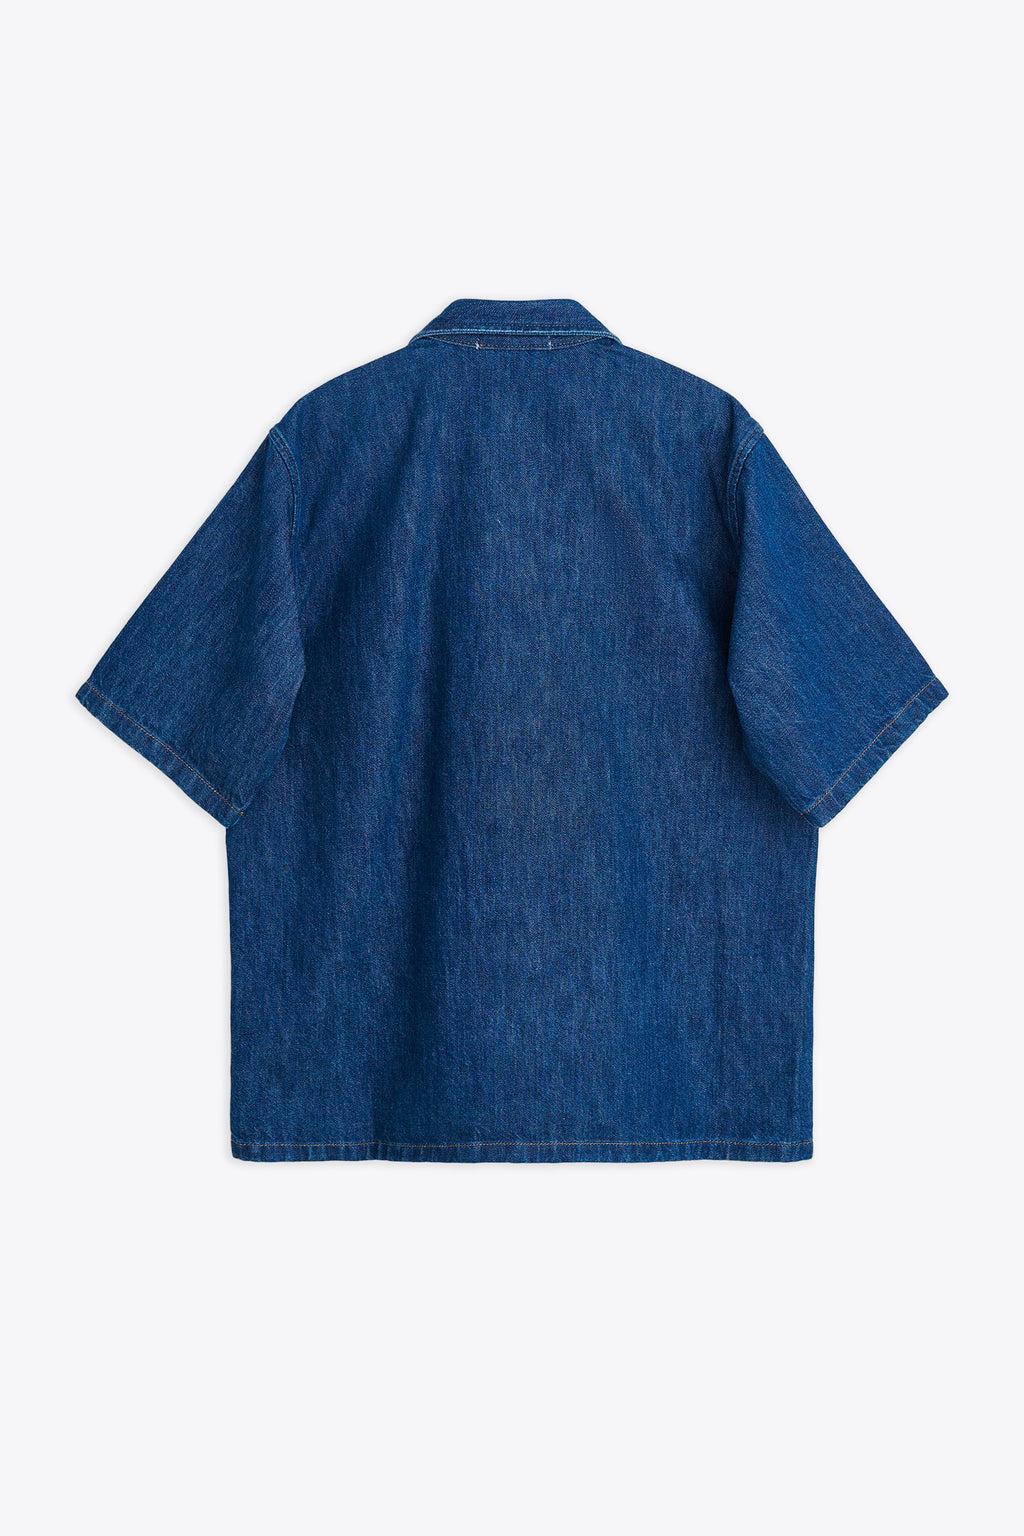 alt-image__Blue-rinse-denim-shirt-with-short-sleeves---Loose-Shirt